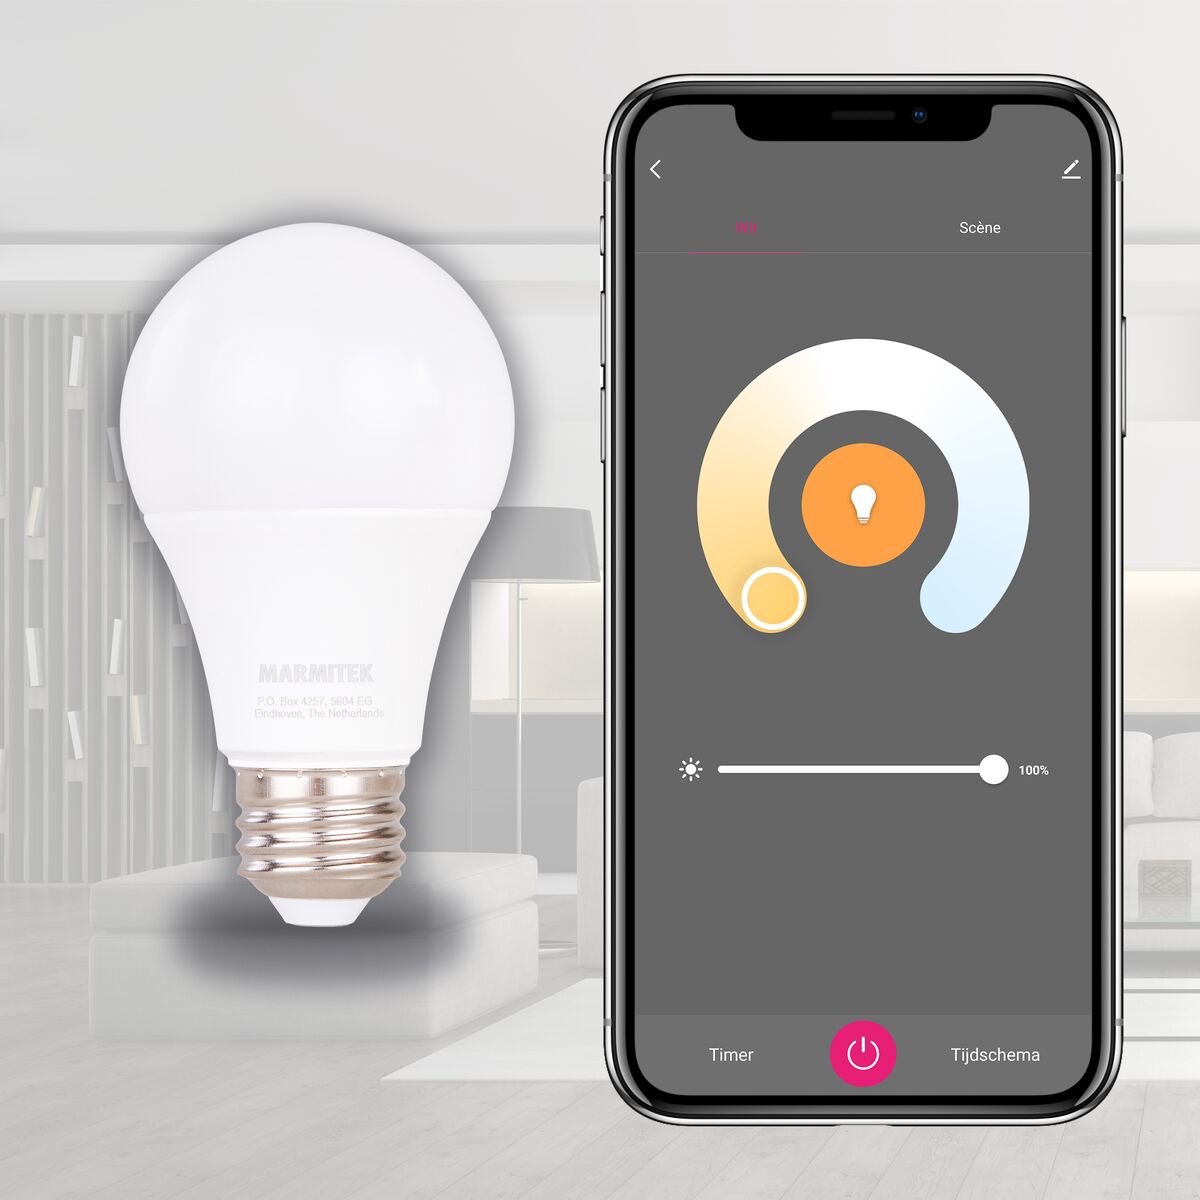 Glow ME - Smart bulb - E27 - Control via app - White